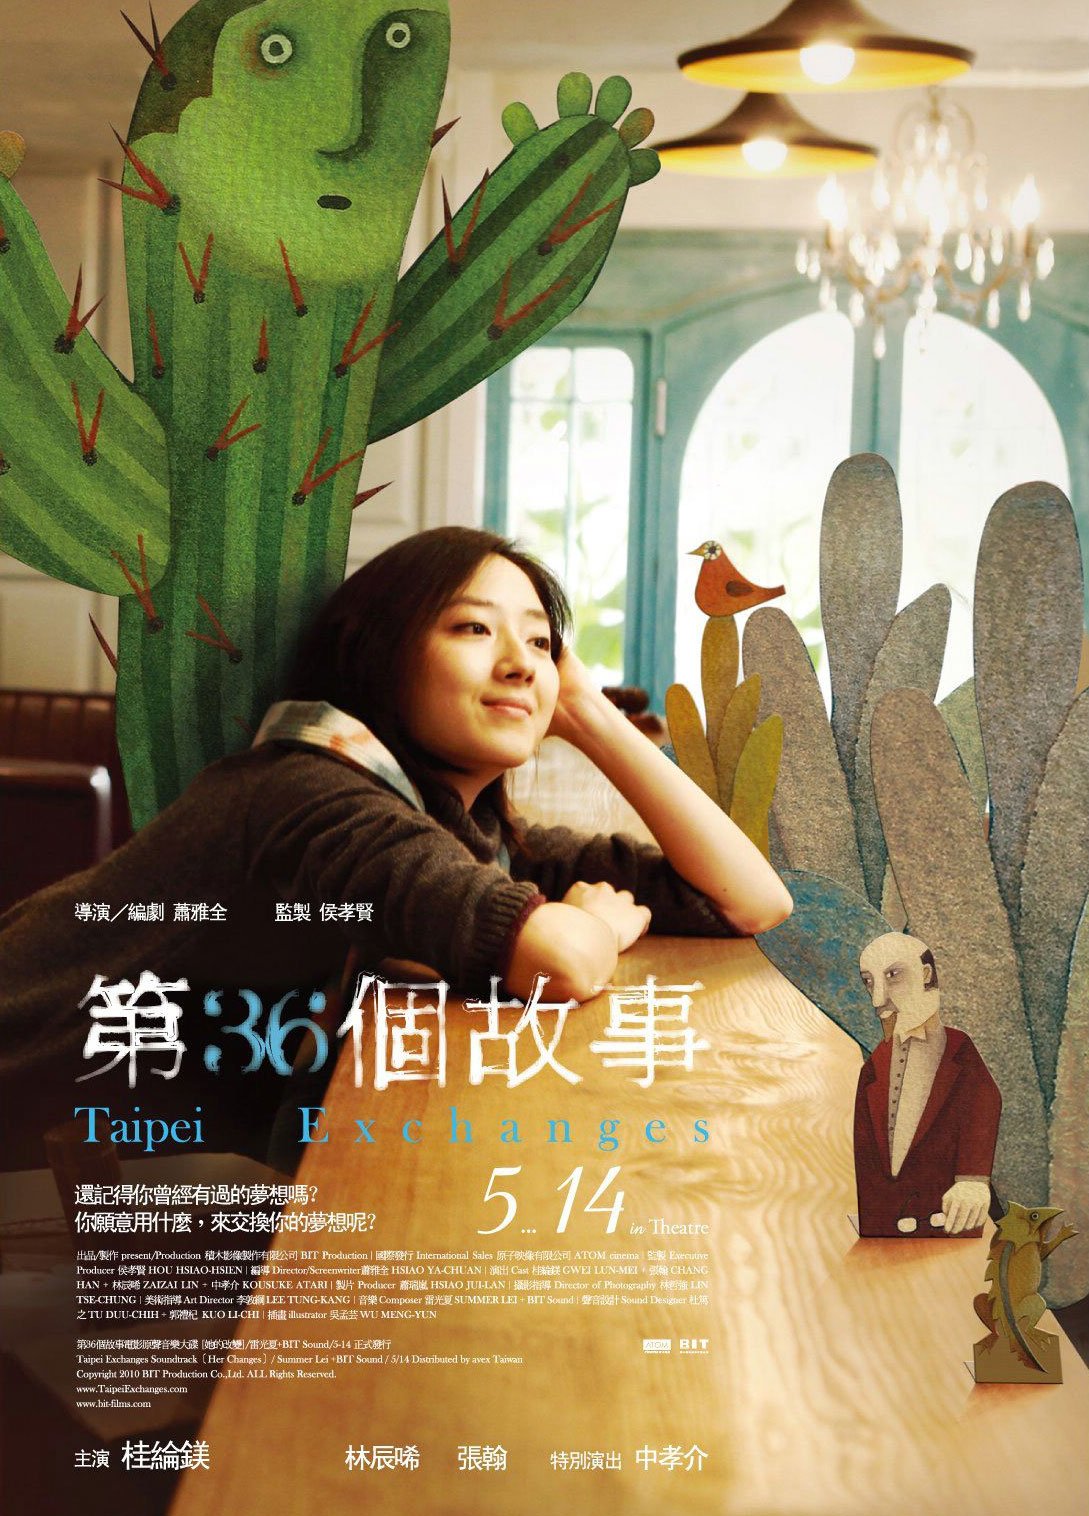 Mandarin poster of the movie Taipei Exchanges